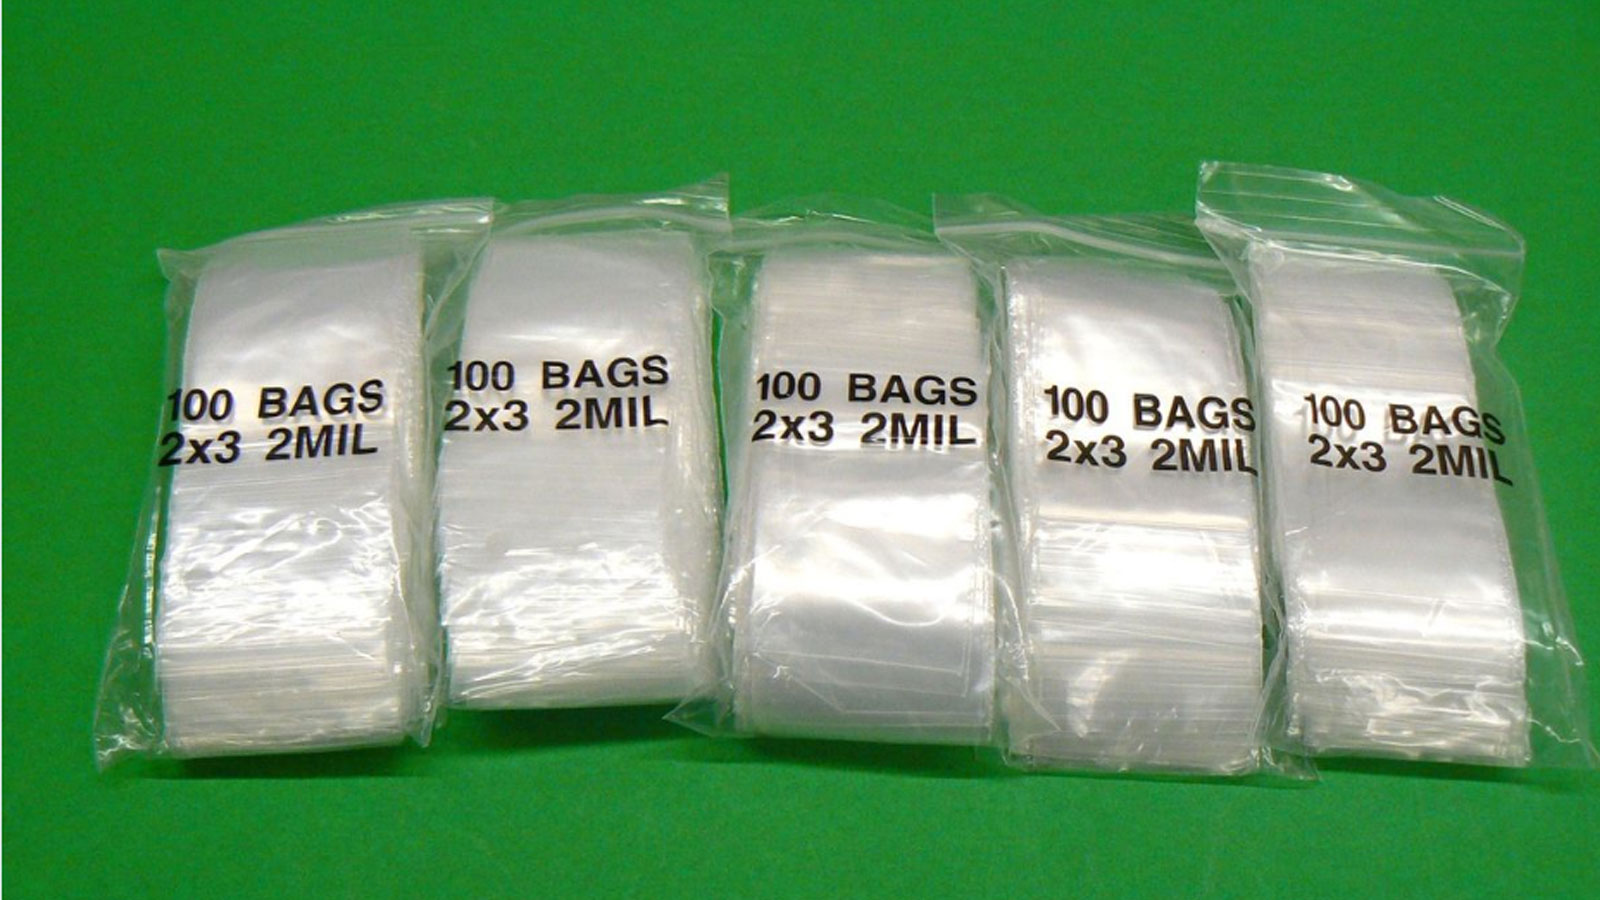 Packaging Materials Manufacturer and Supplier of Plastic bags, Printed plastic bags, Printed Polythene bags in In Gurgaon, Manesar, Dharuhera, Neemrana, Bawal, Bhiwadi, Vilaspur and NCR